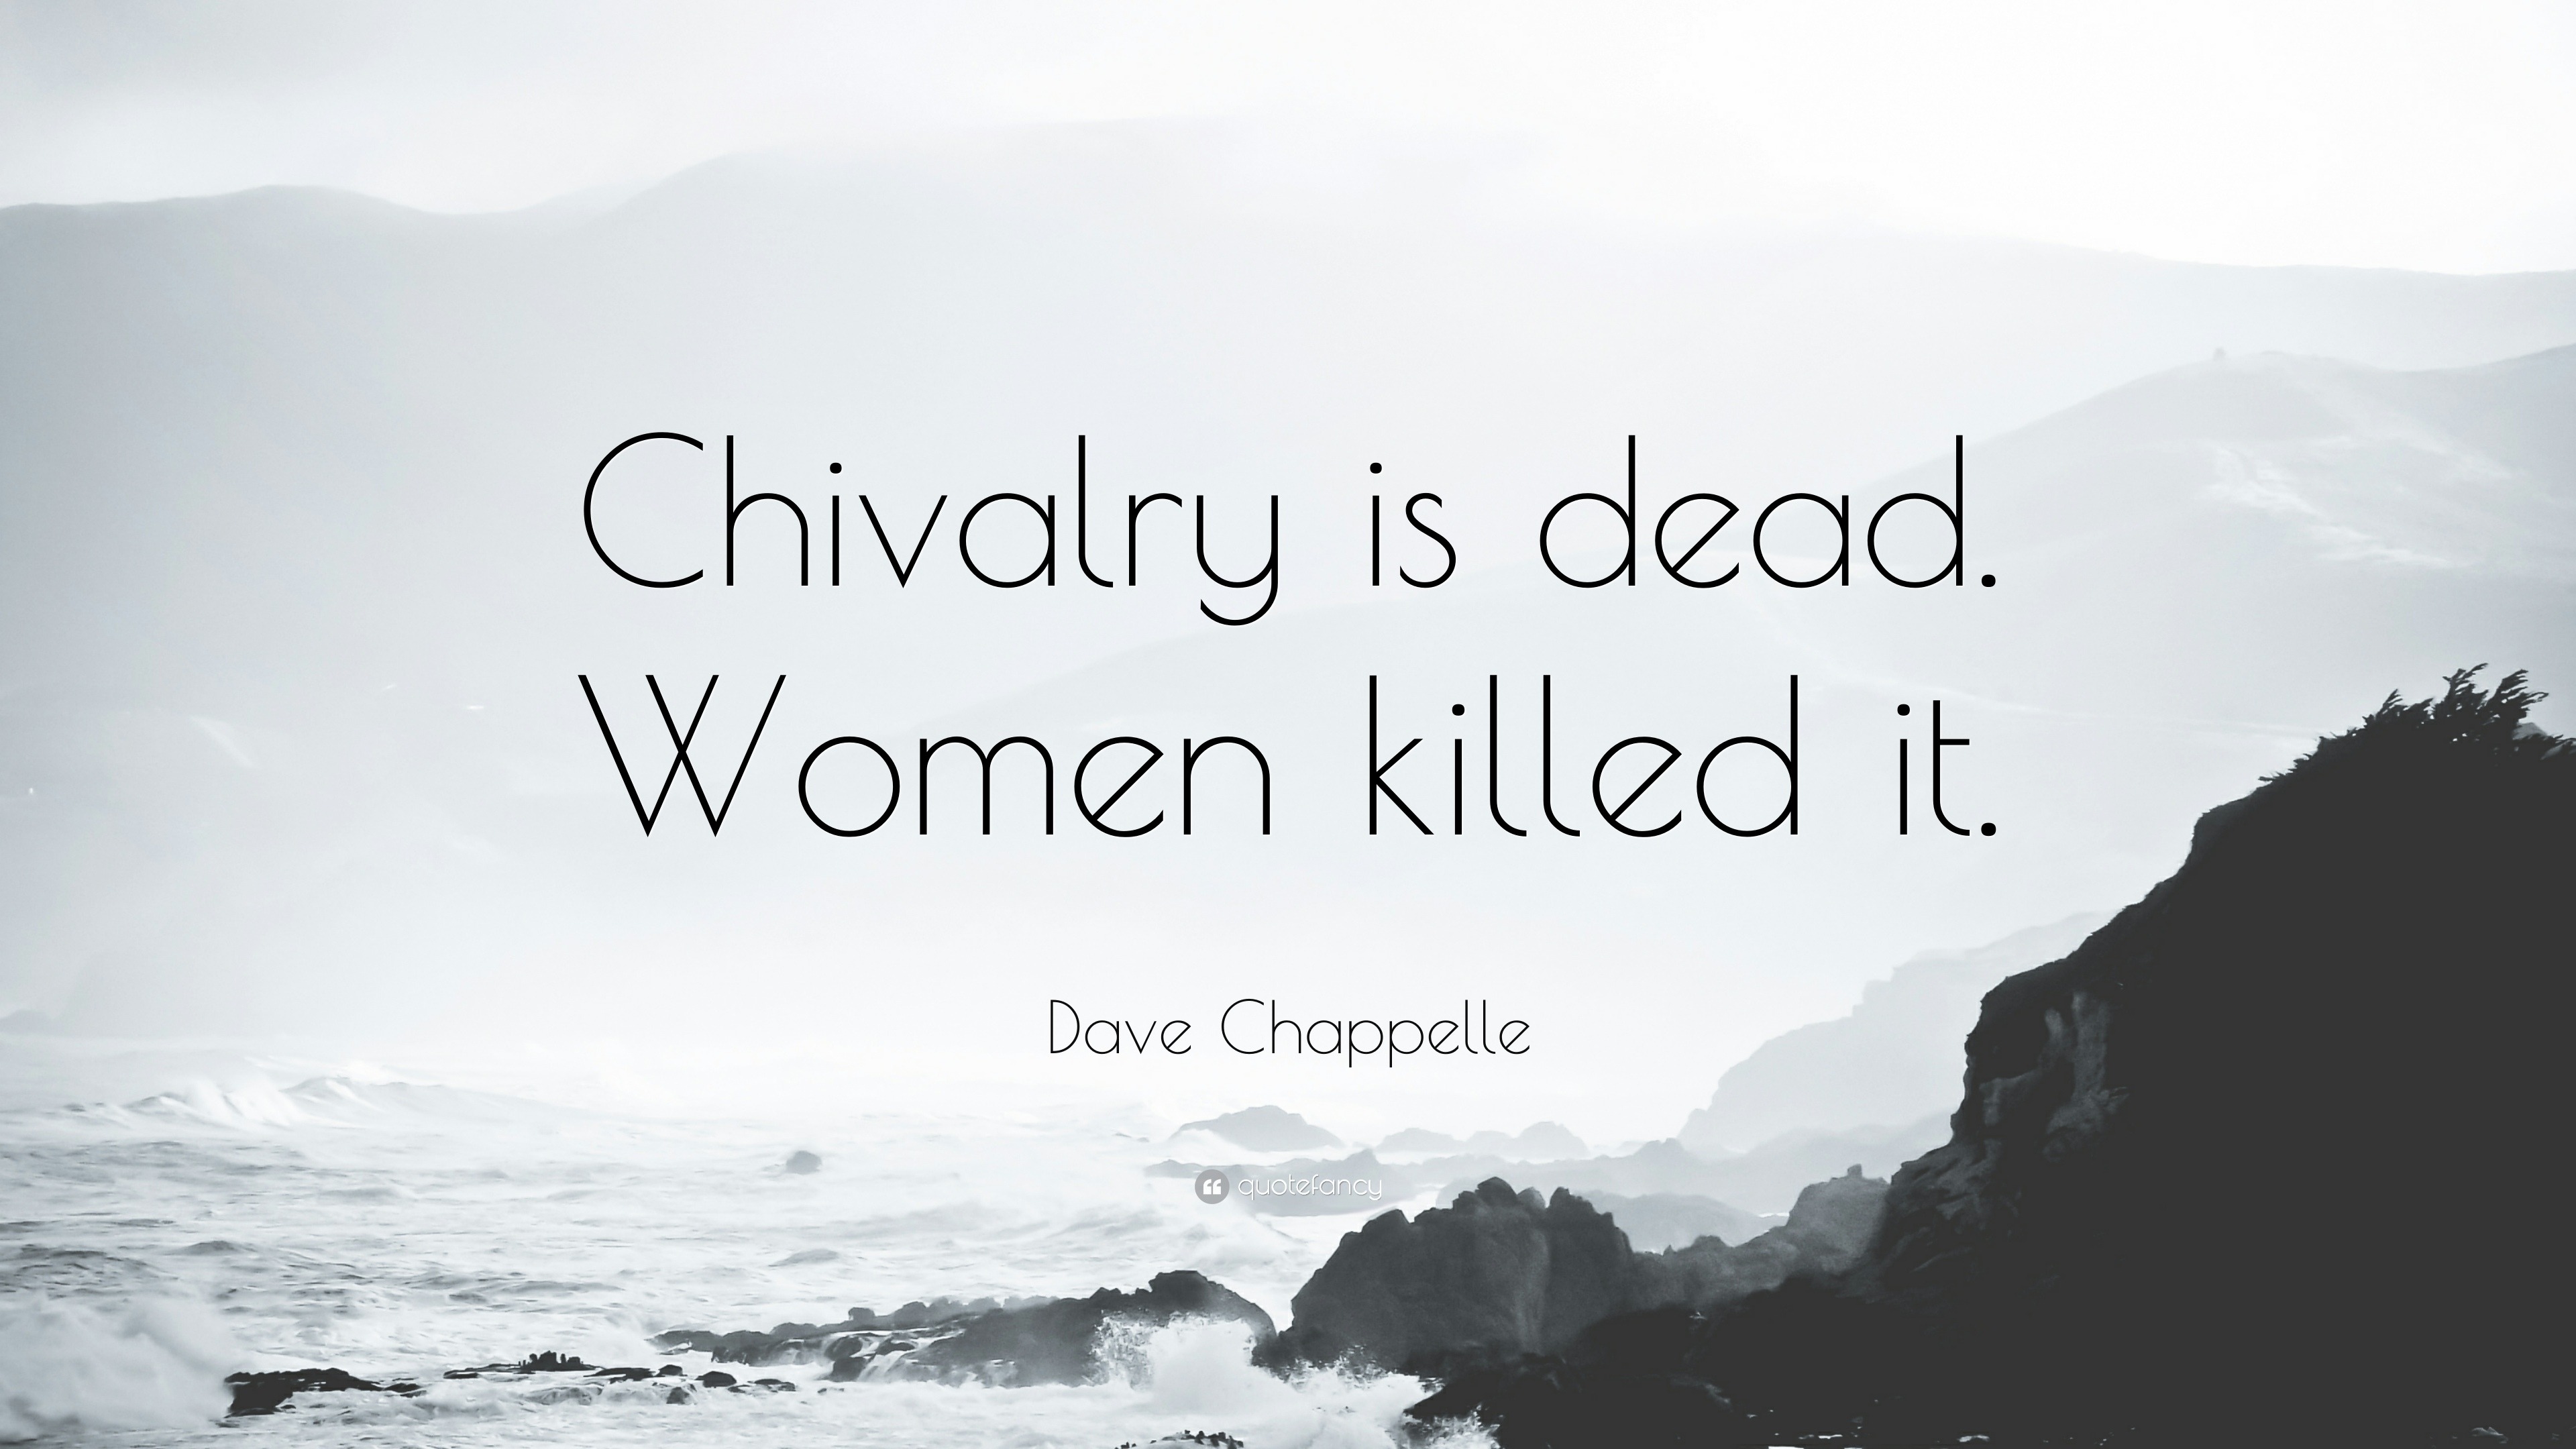 chivalry towards women quotes